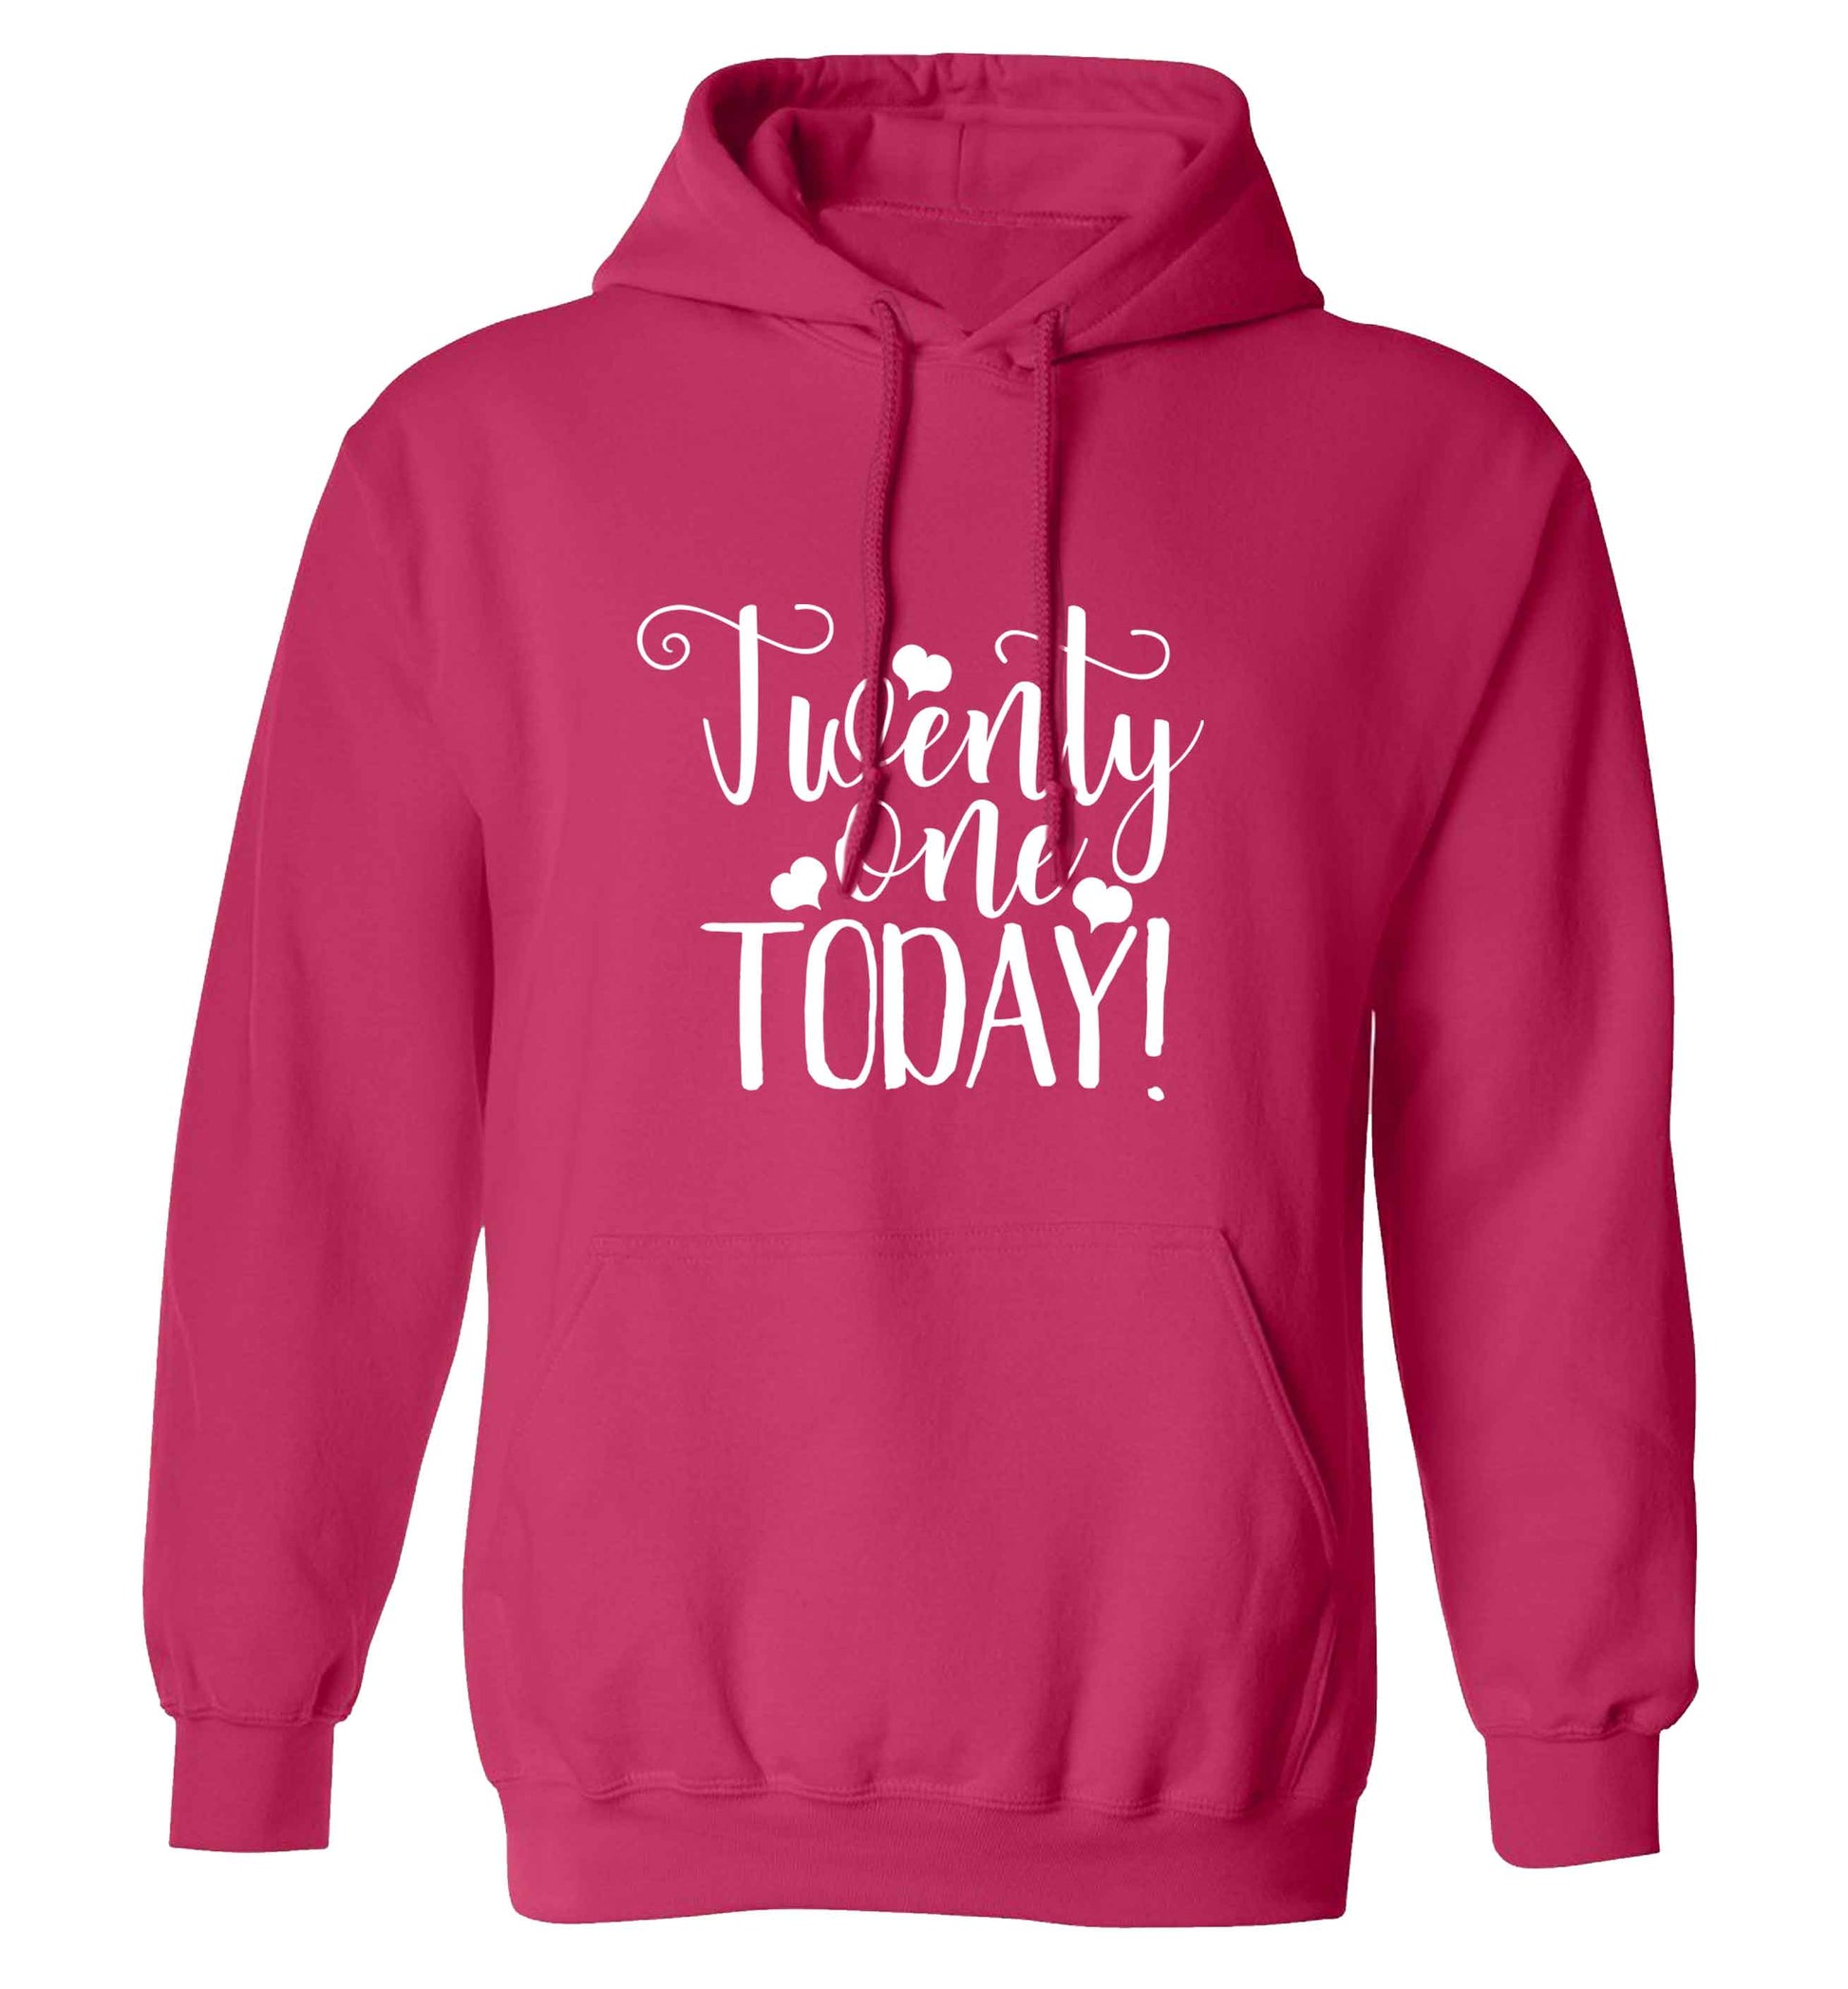 Twenty one today!adults unisex pink hoodie 2XL